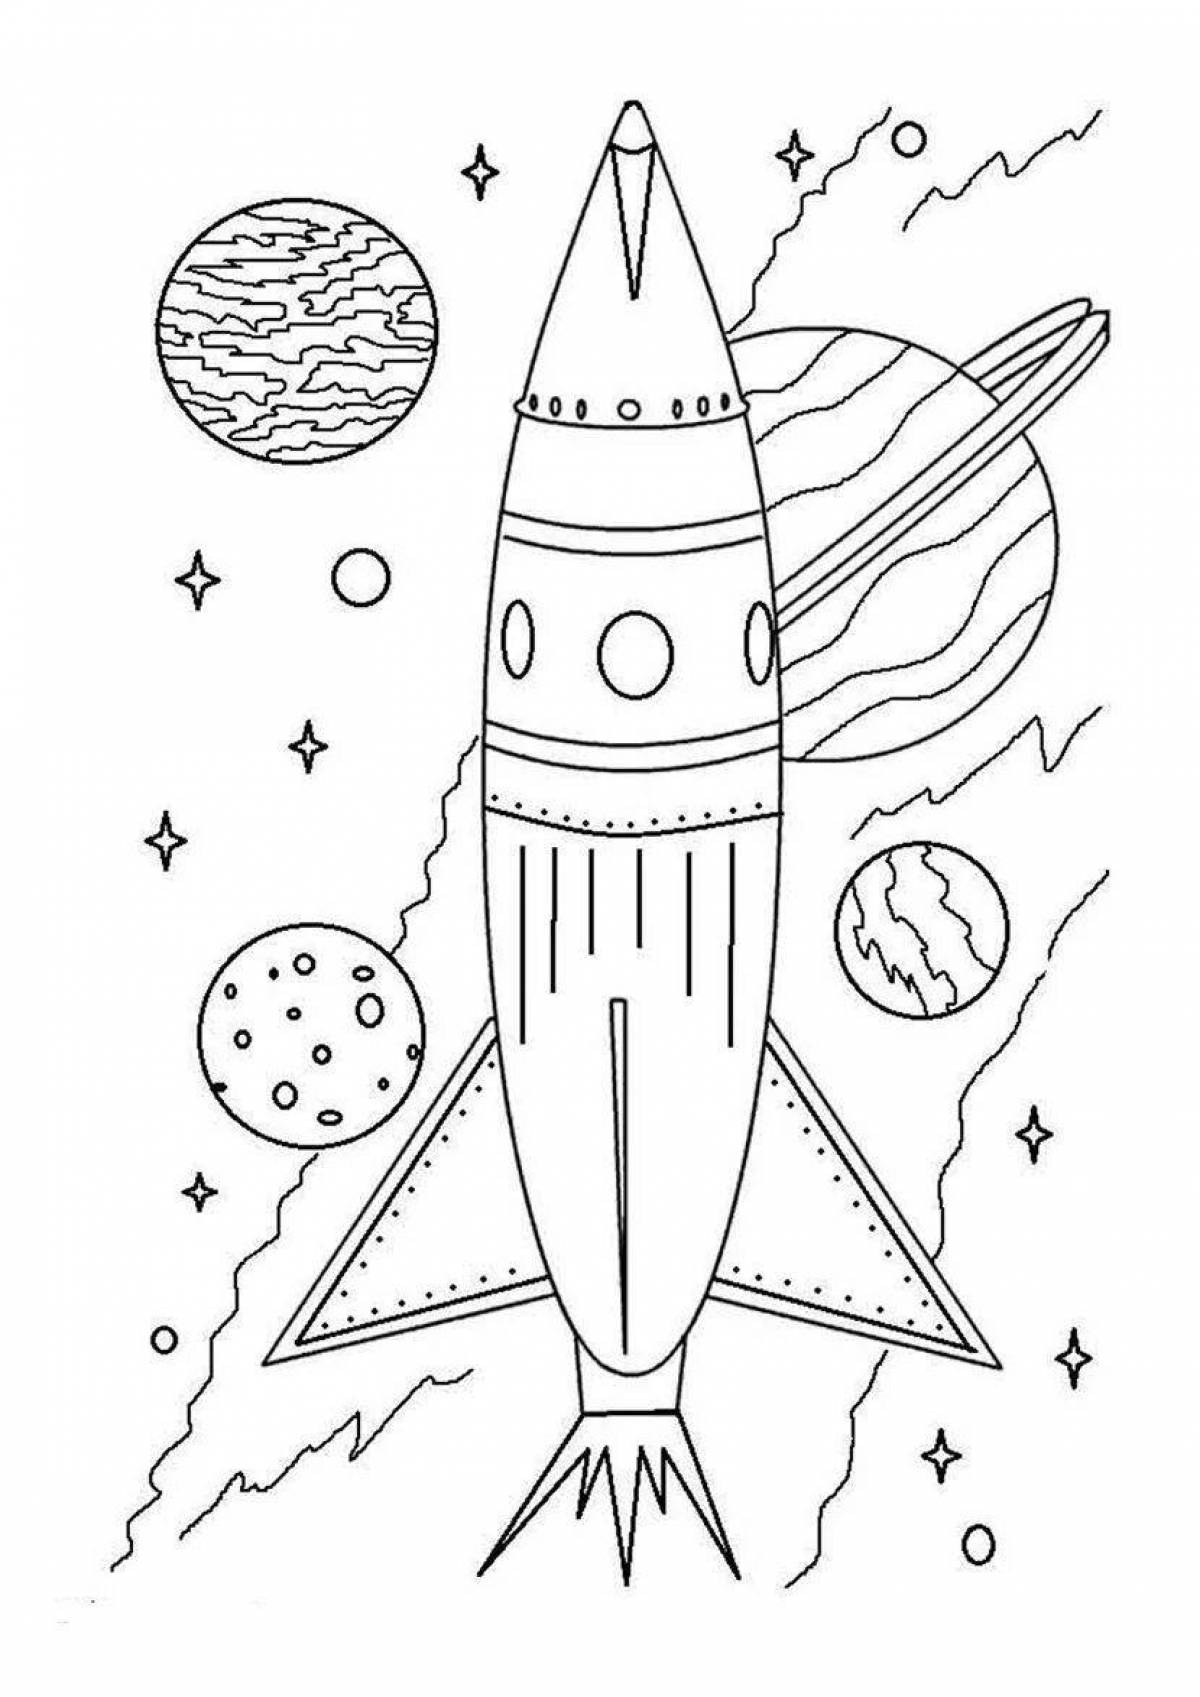 Royal space rocket coloring page